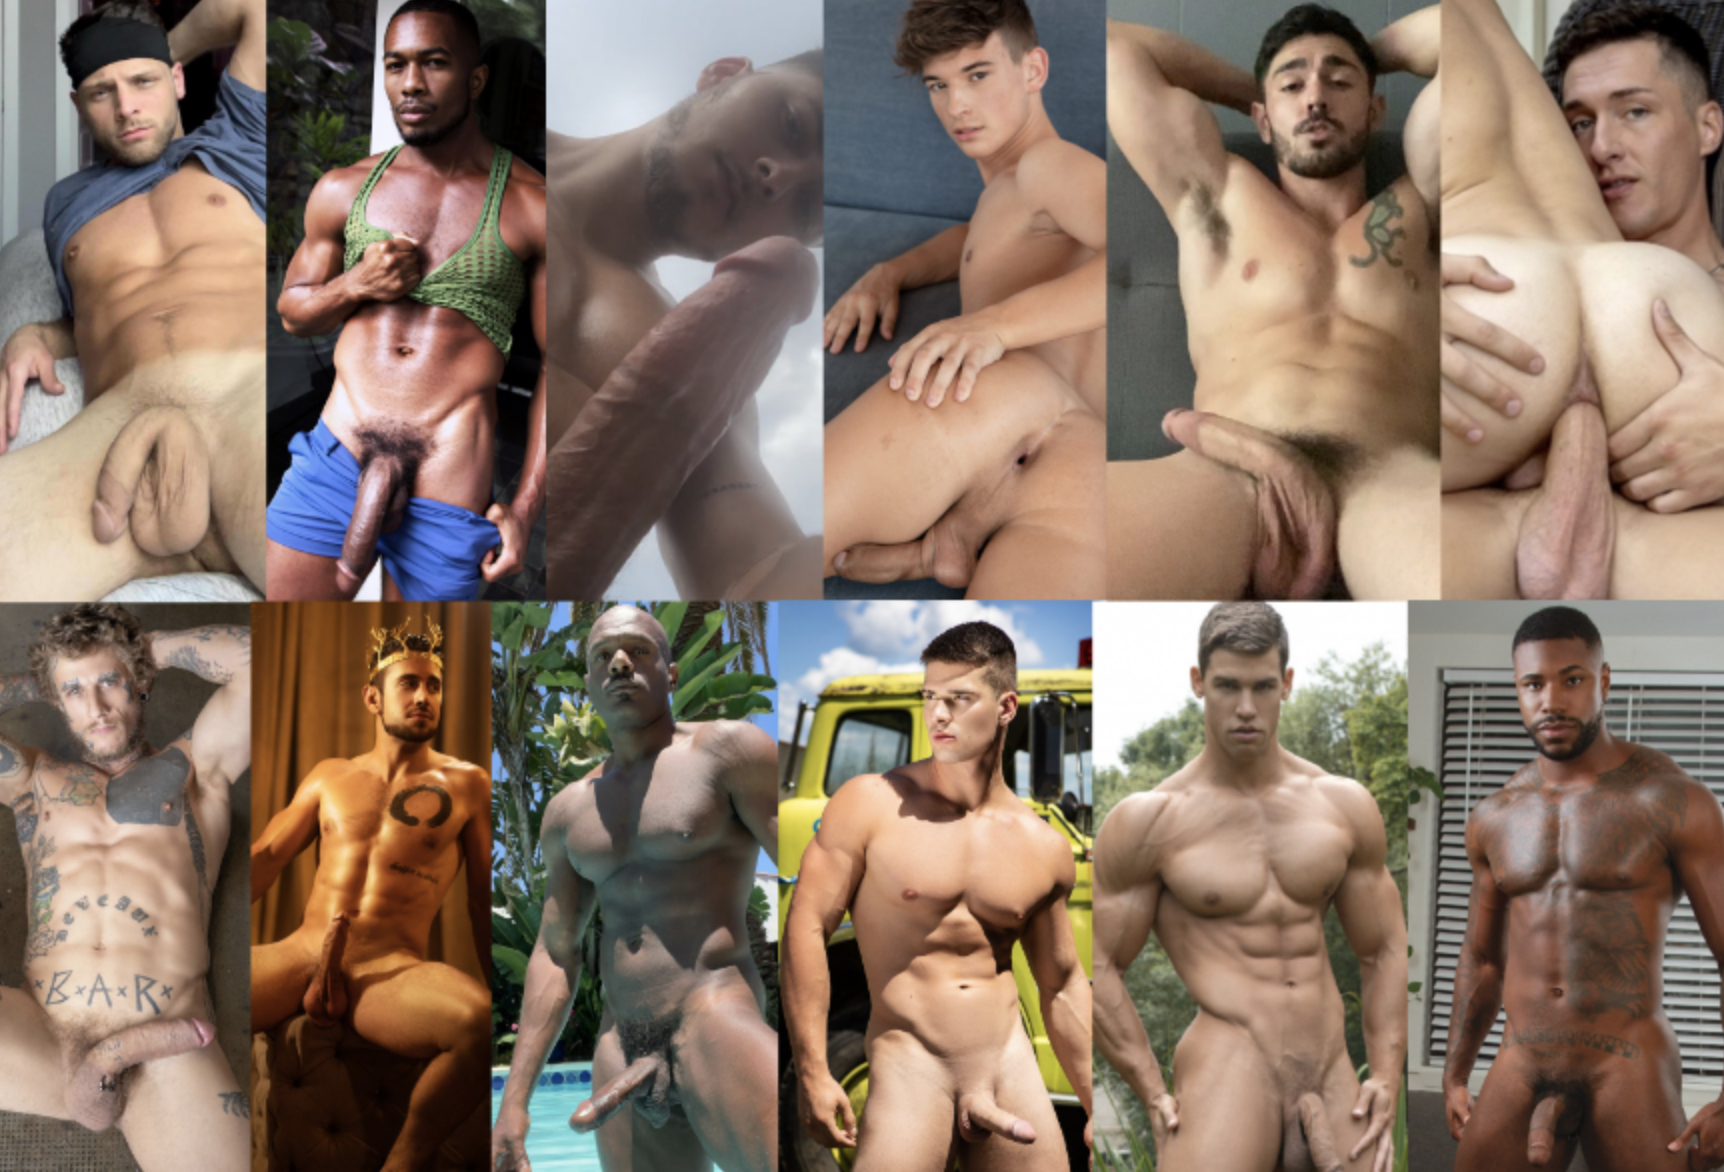 Photos of gay porn stars